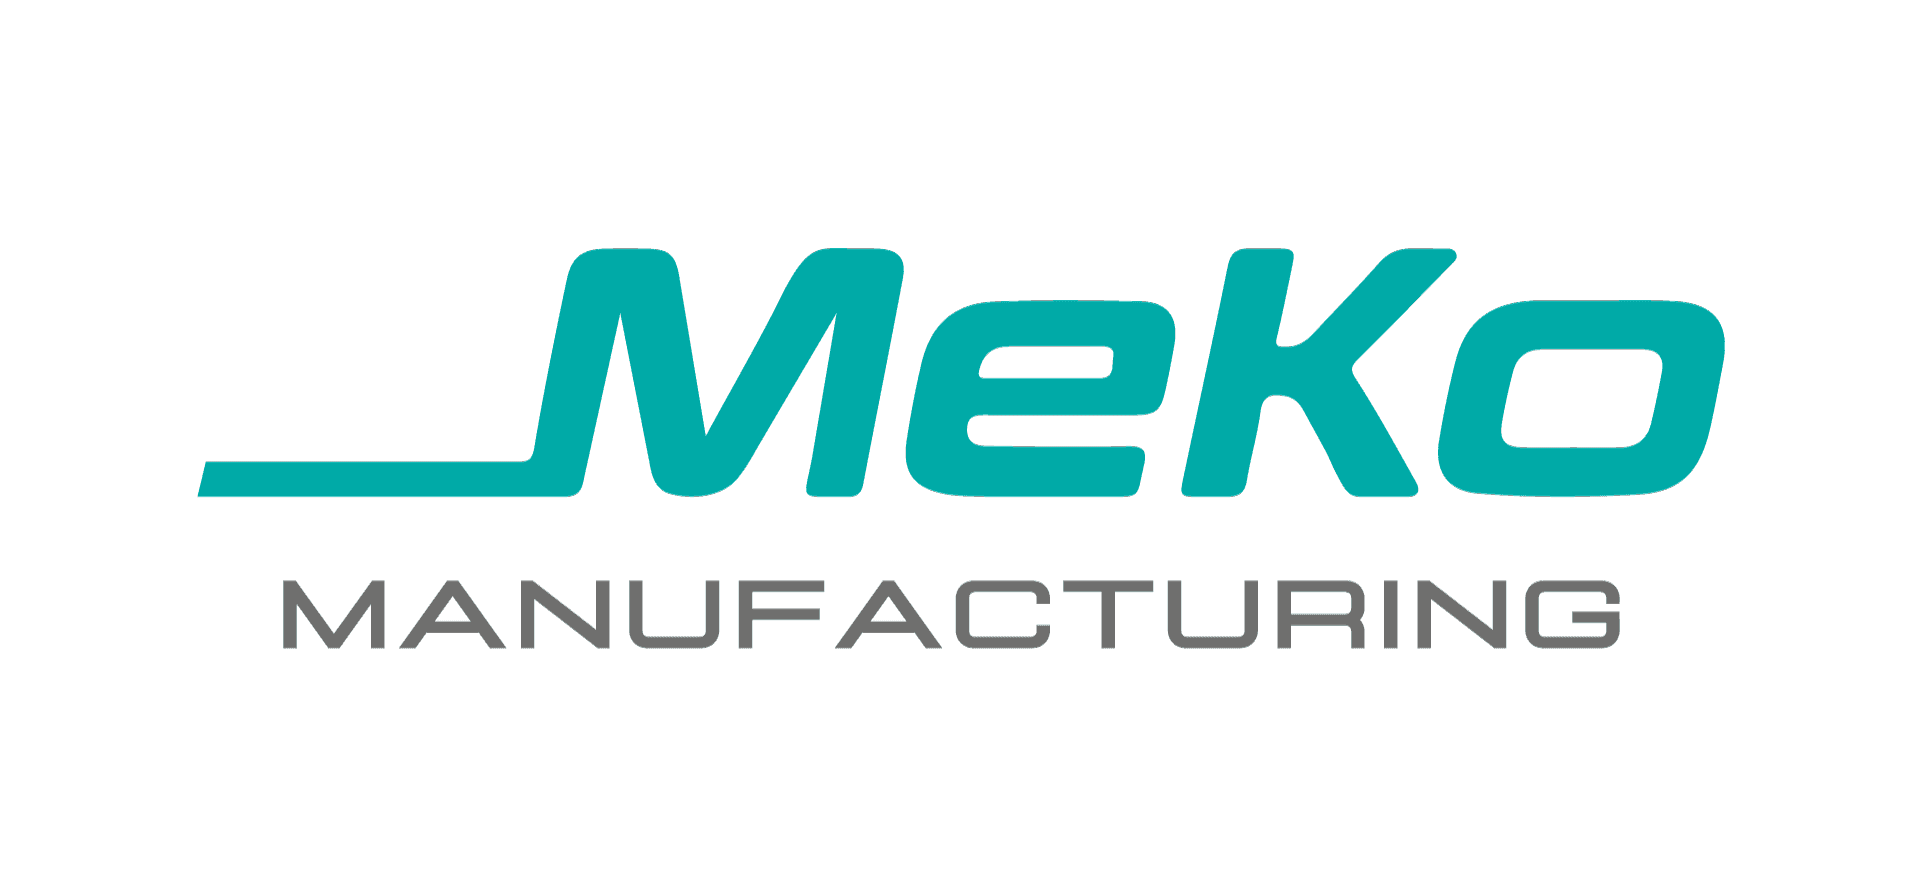 MeKo heißt nun MeKo Manufacturing